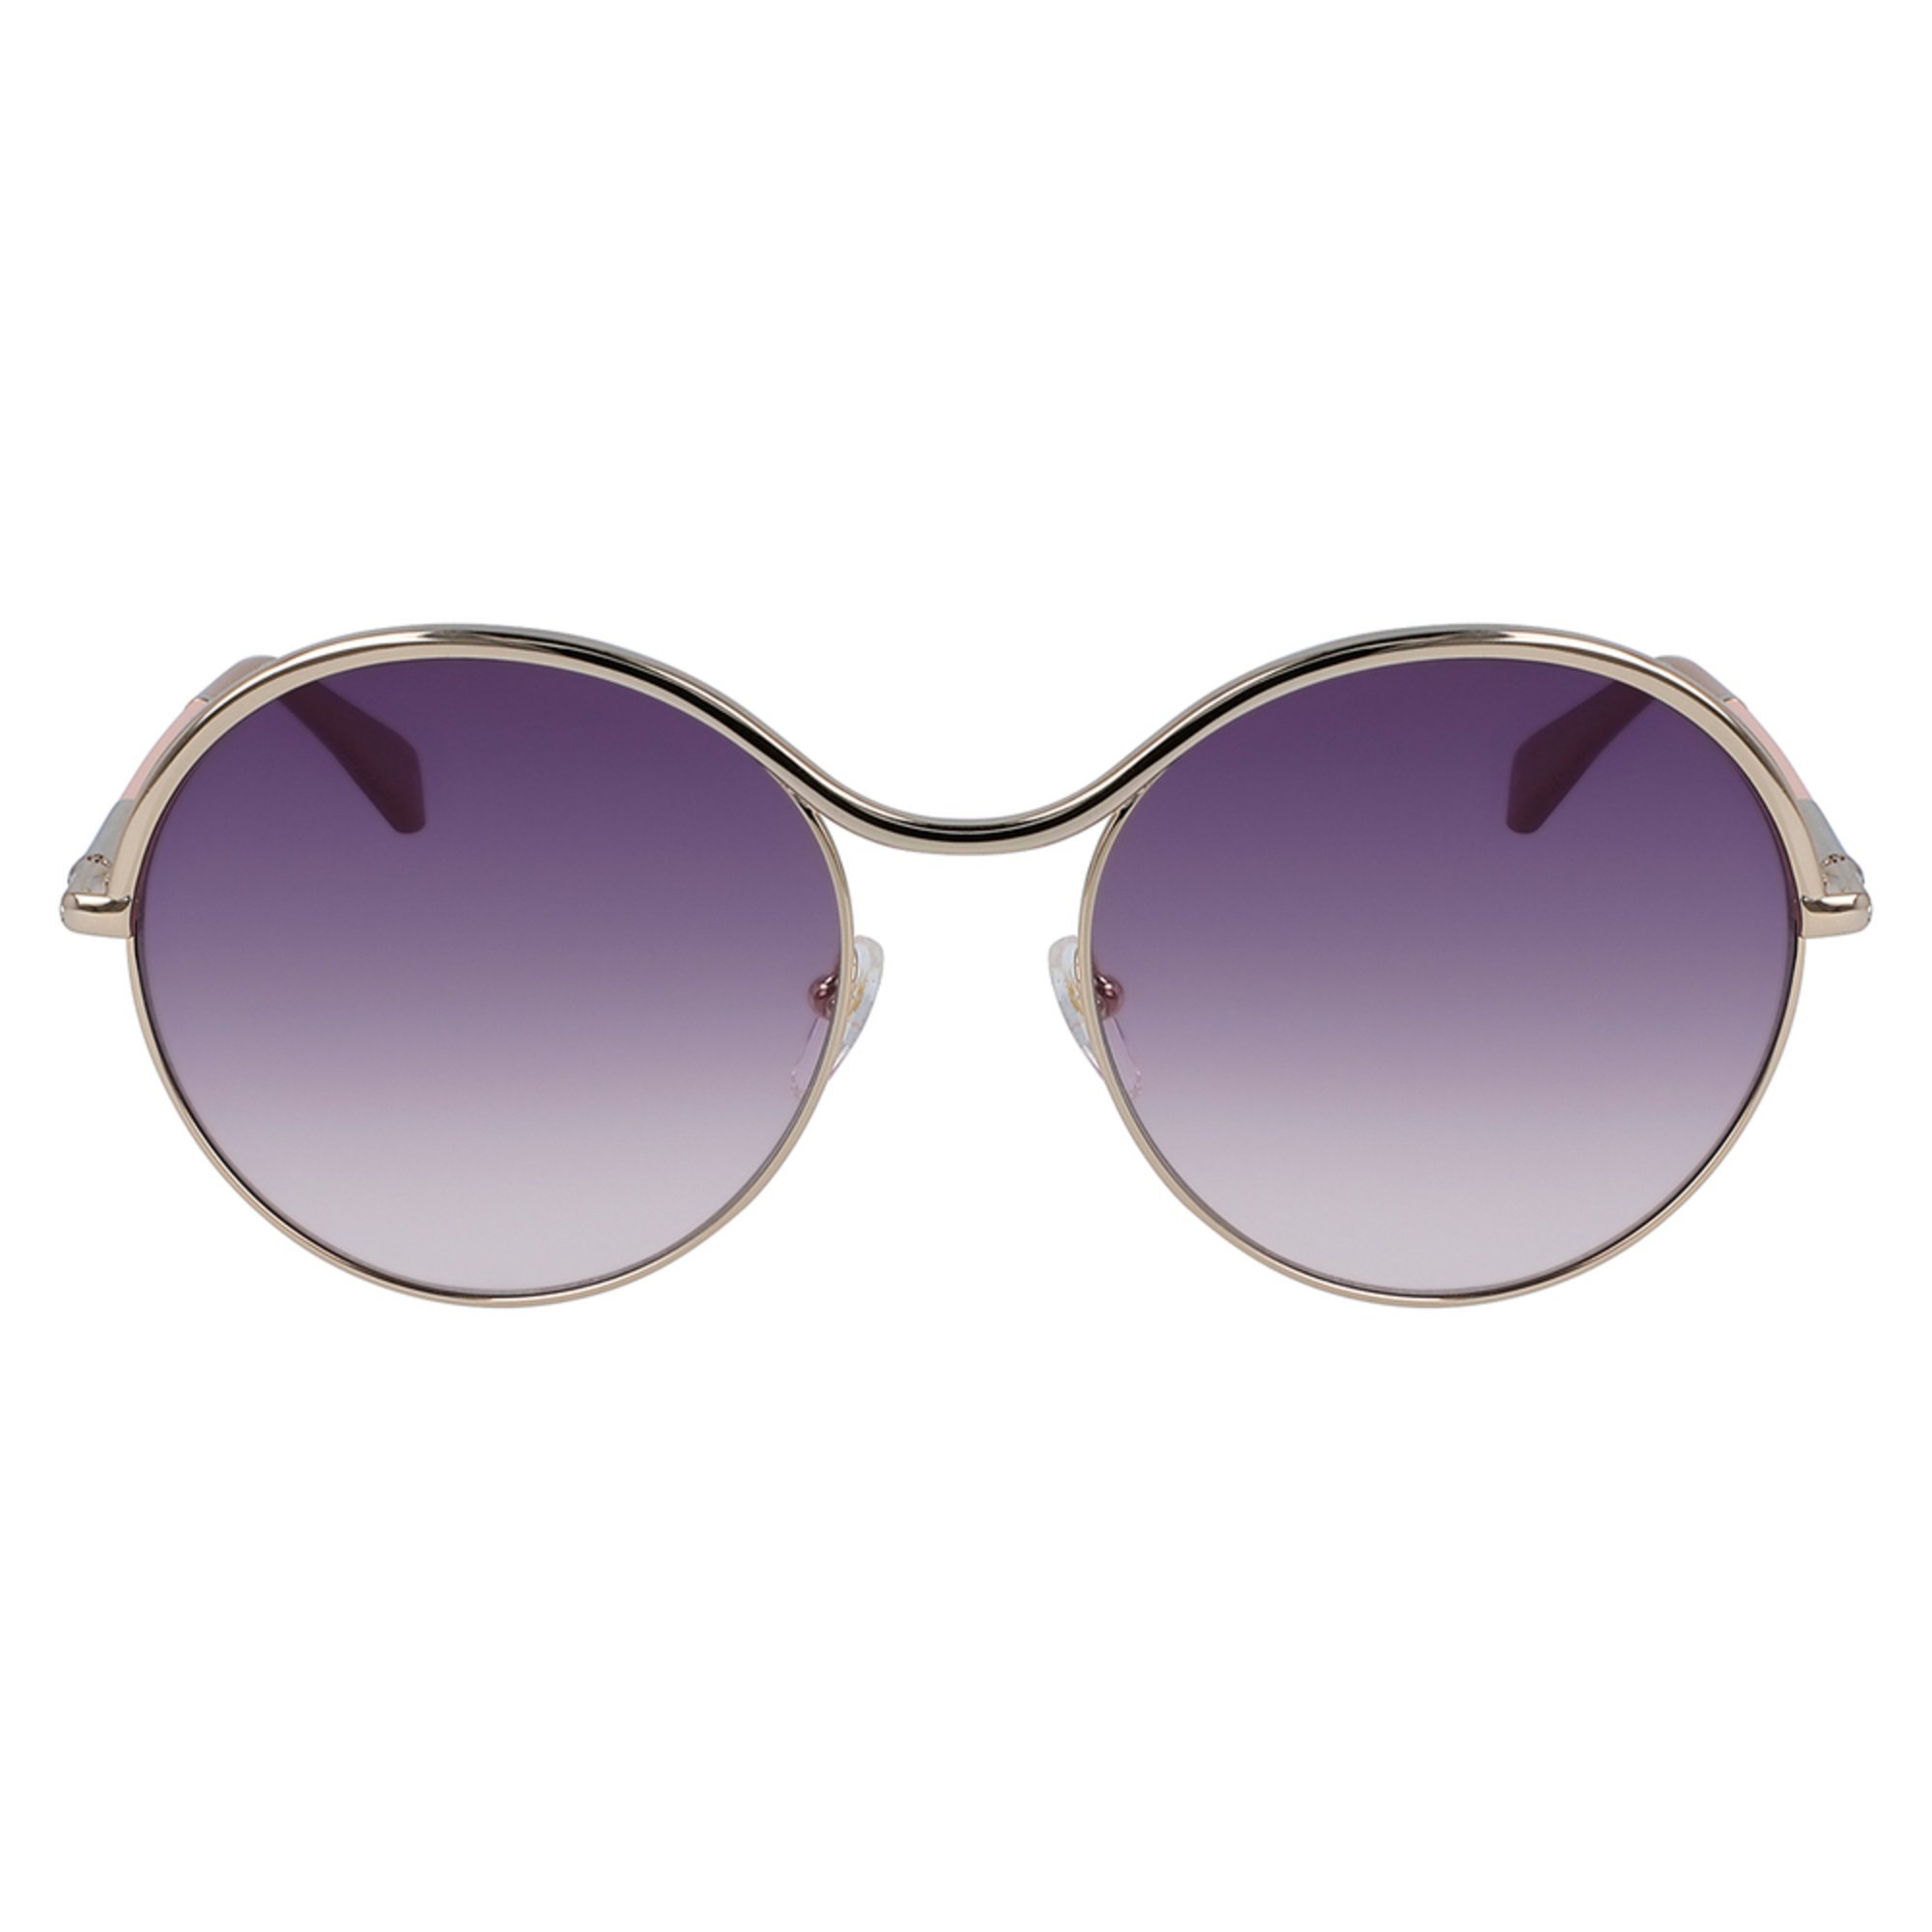 Longchamp Women's Round Sunglasses | Women's Sunglasses | Accessories ...